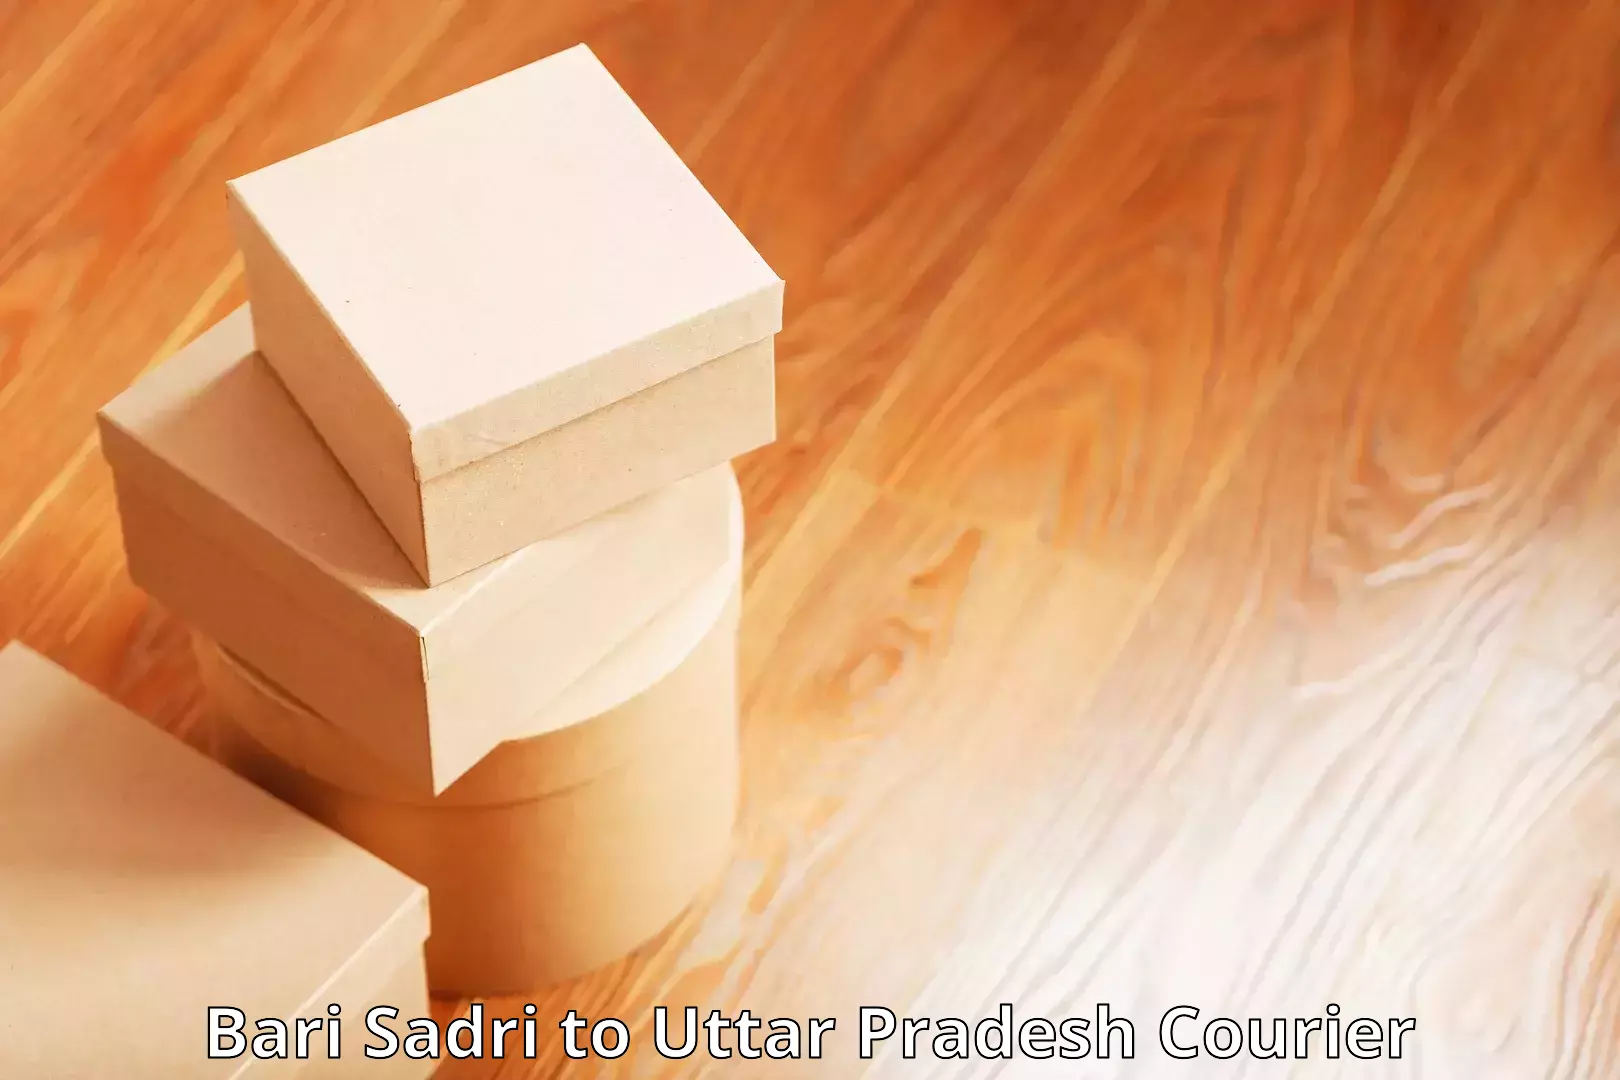 Package delivery network Bari Sadri to Uttar Pradesh